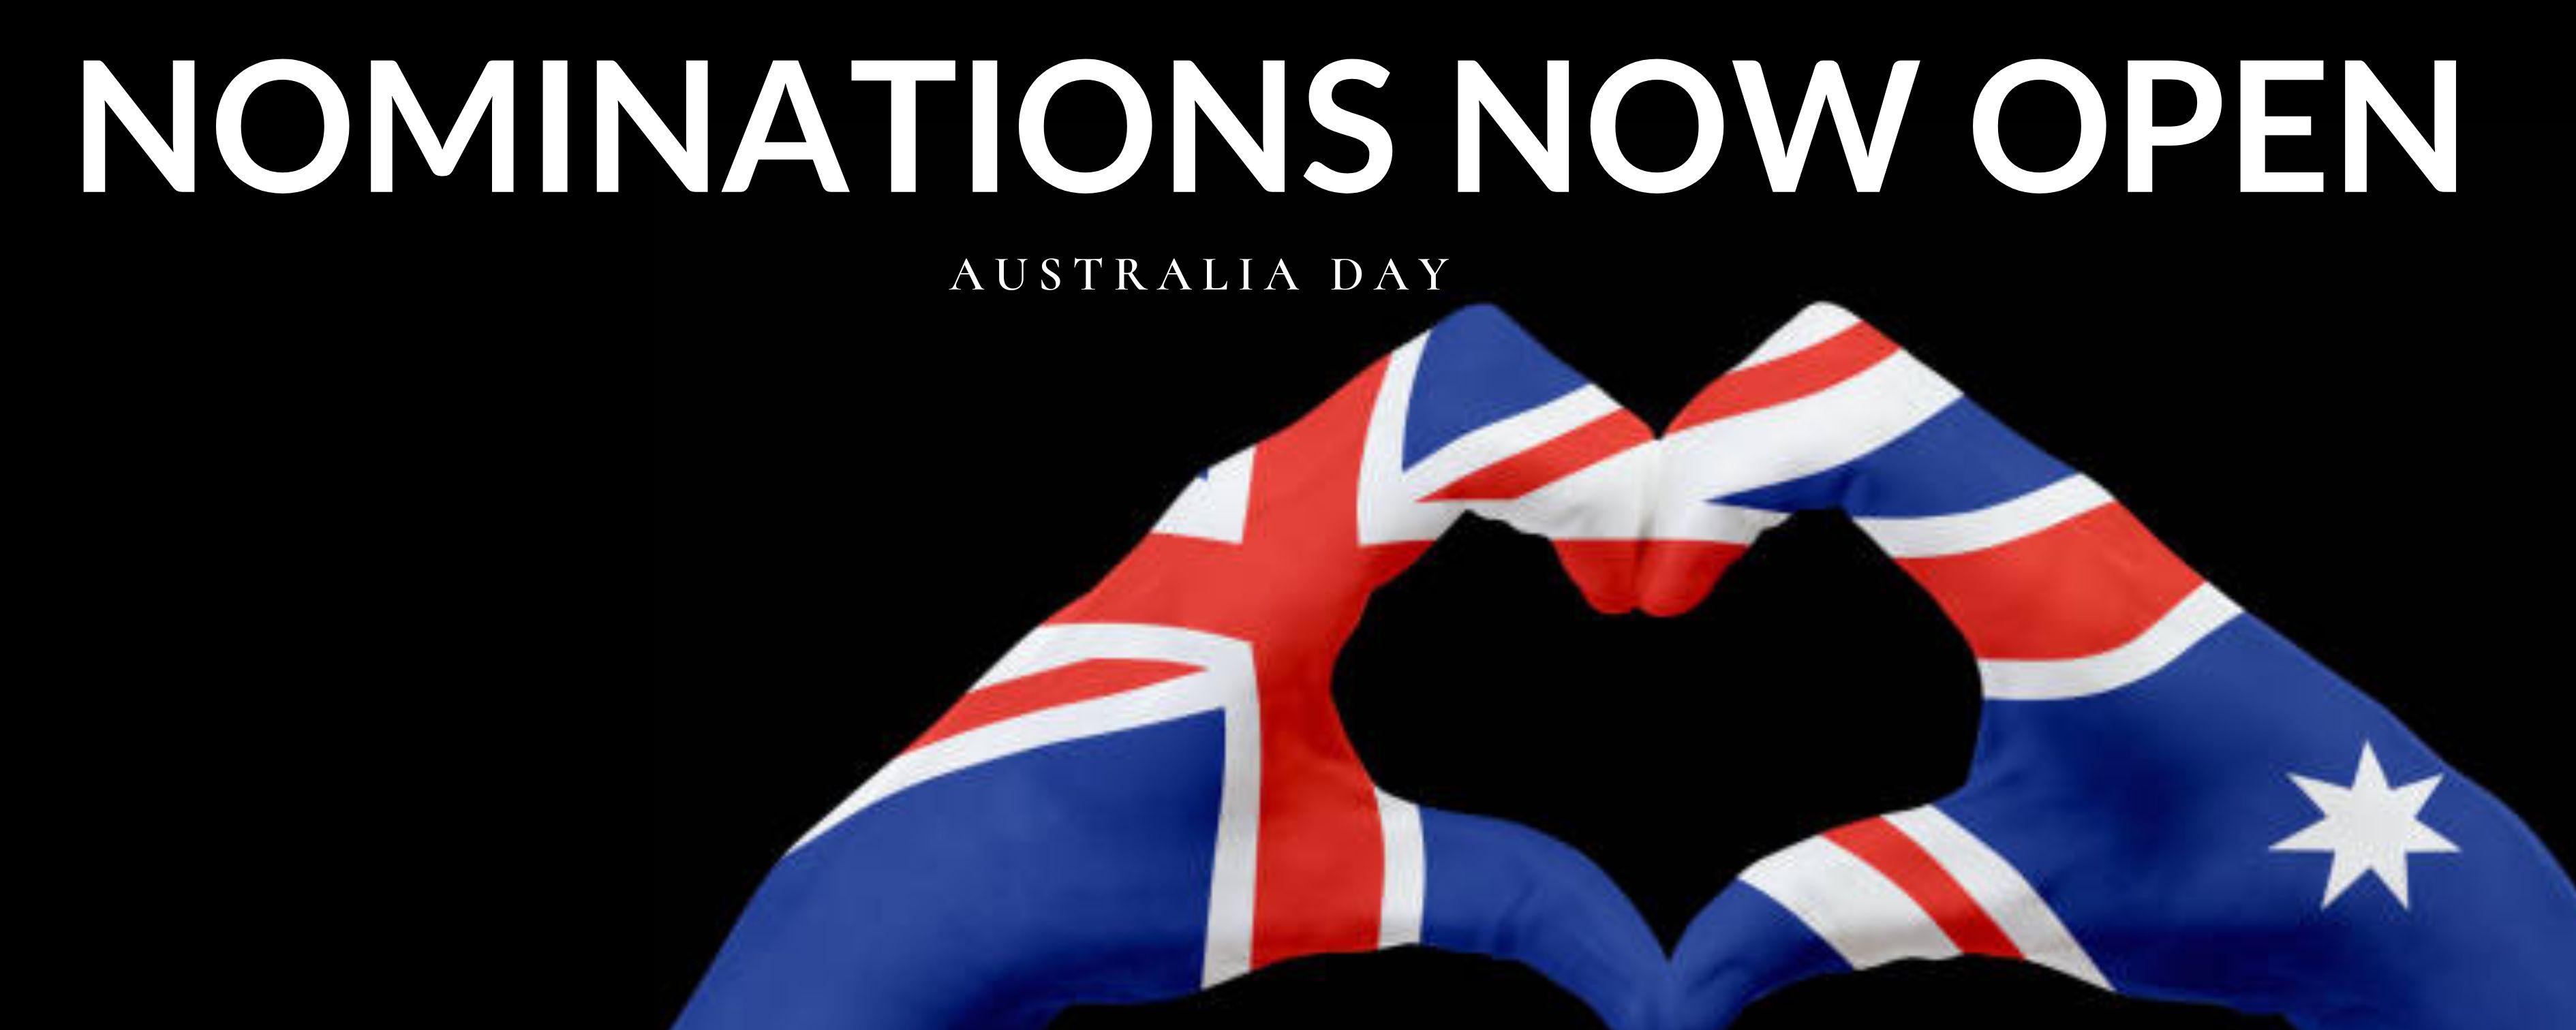 Australia day nominations